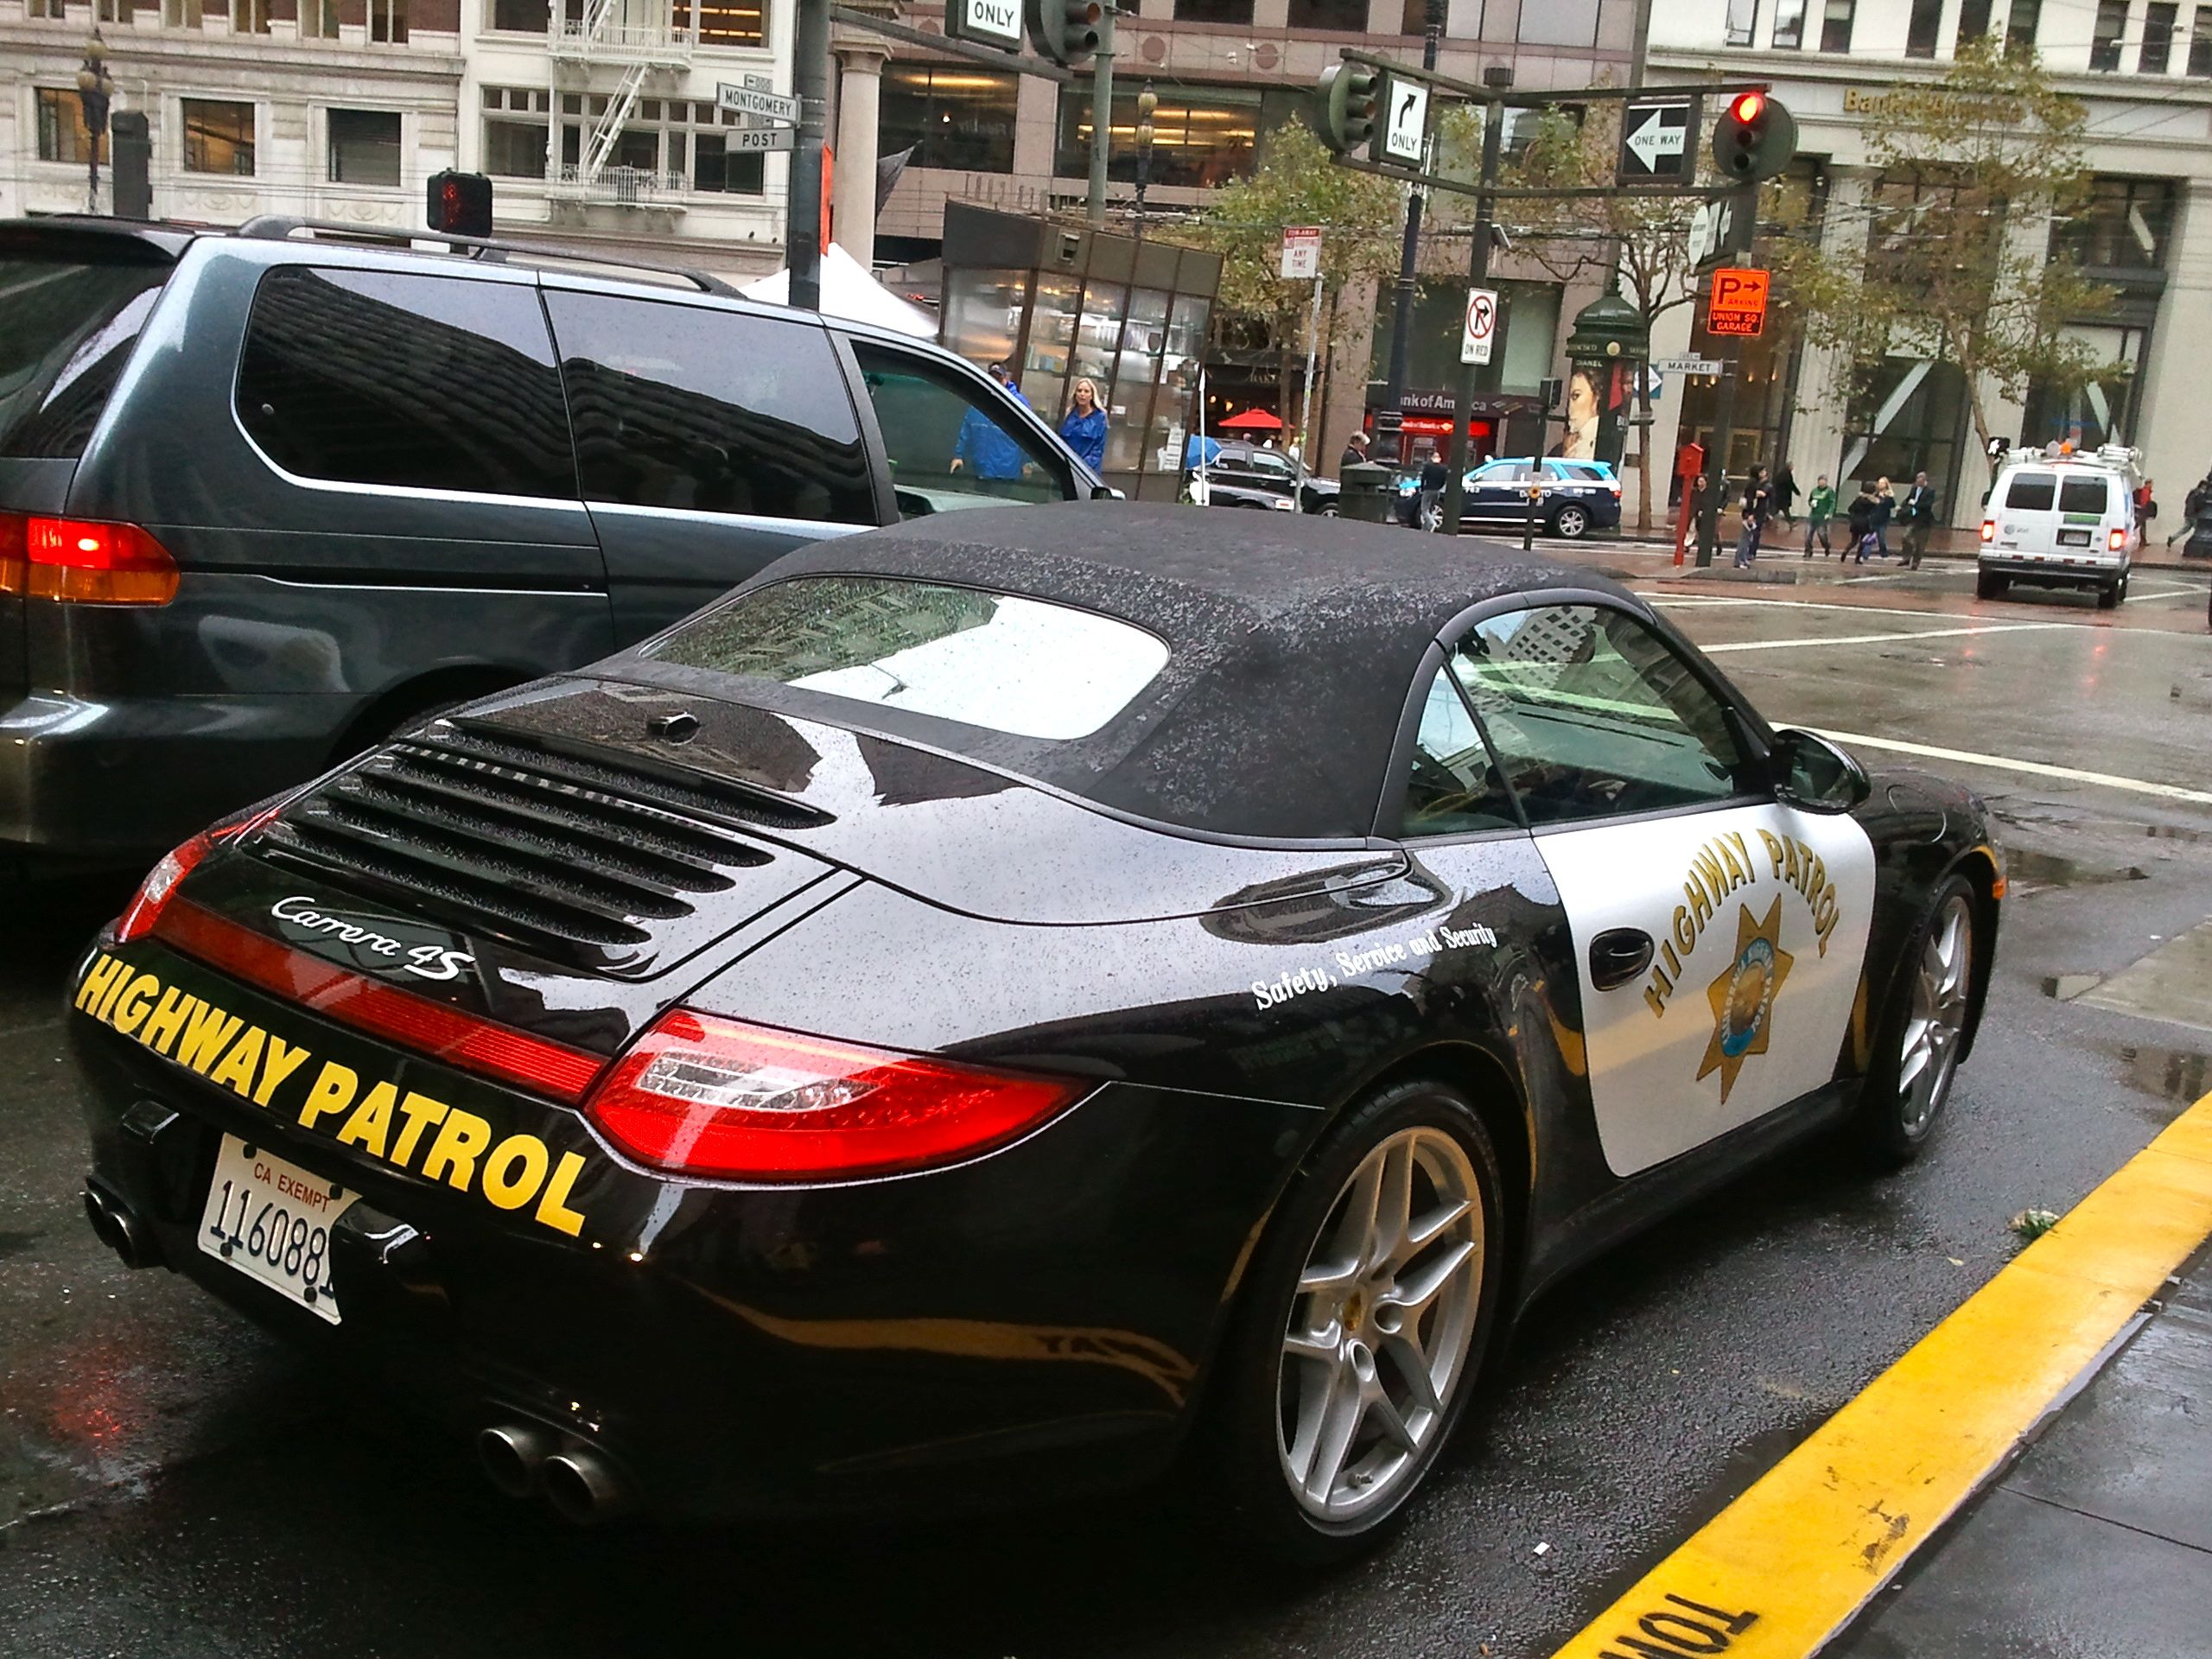 California Highway Patrol Porsche